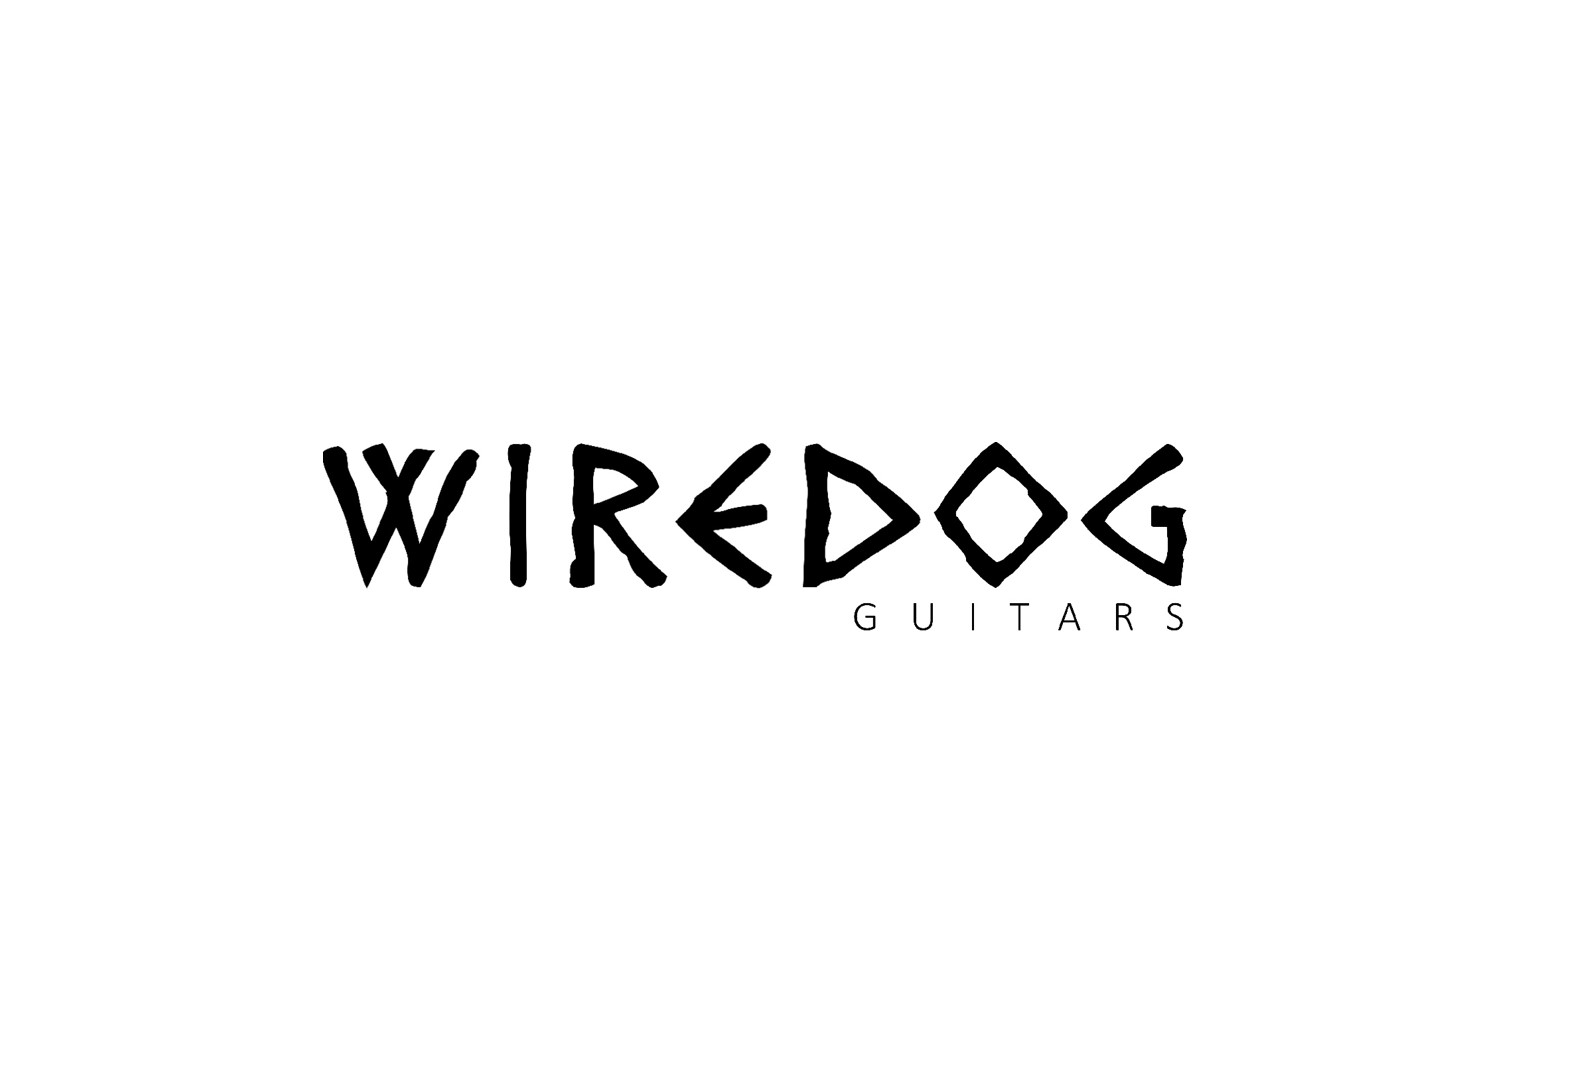 WIREDOG GUITARS WEB LINK